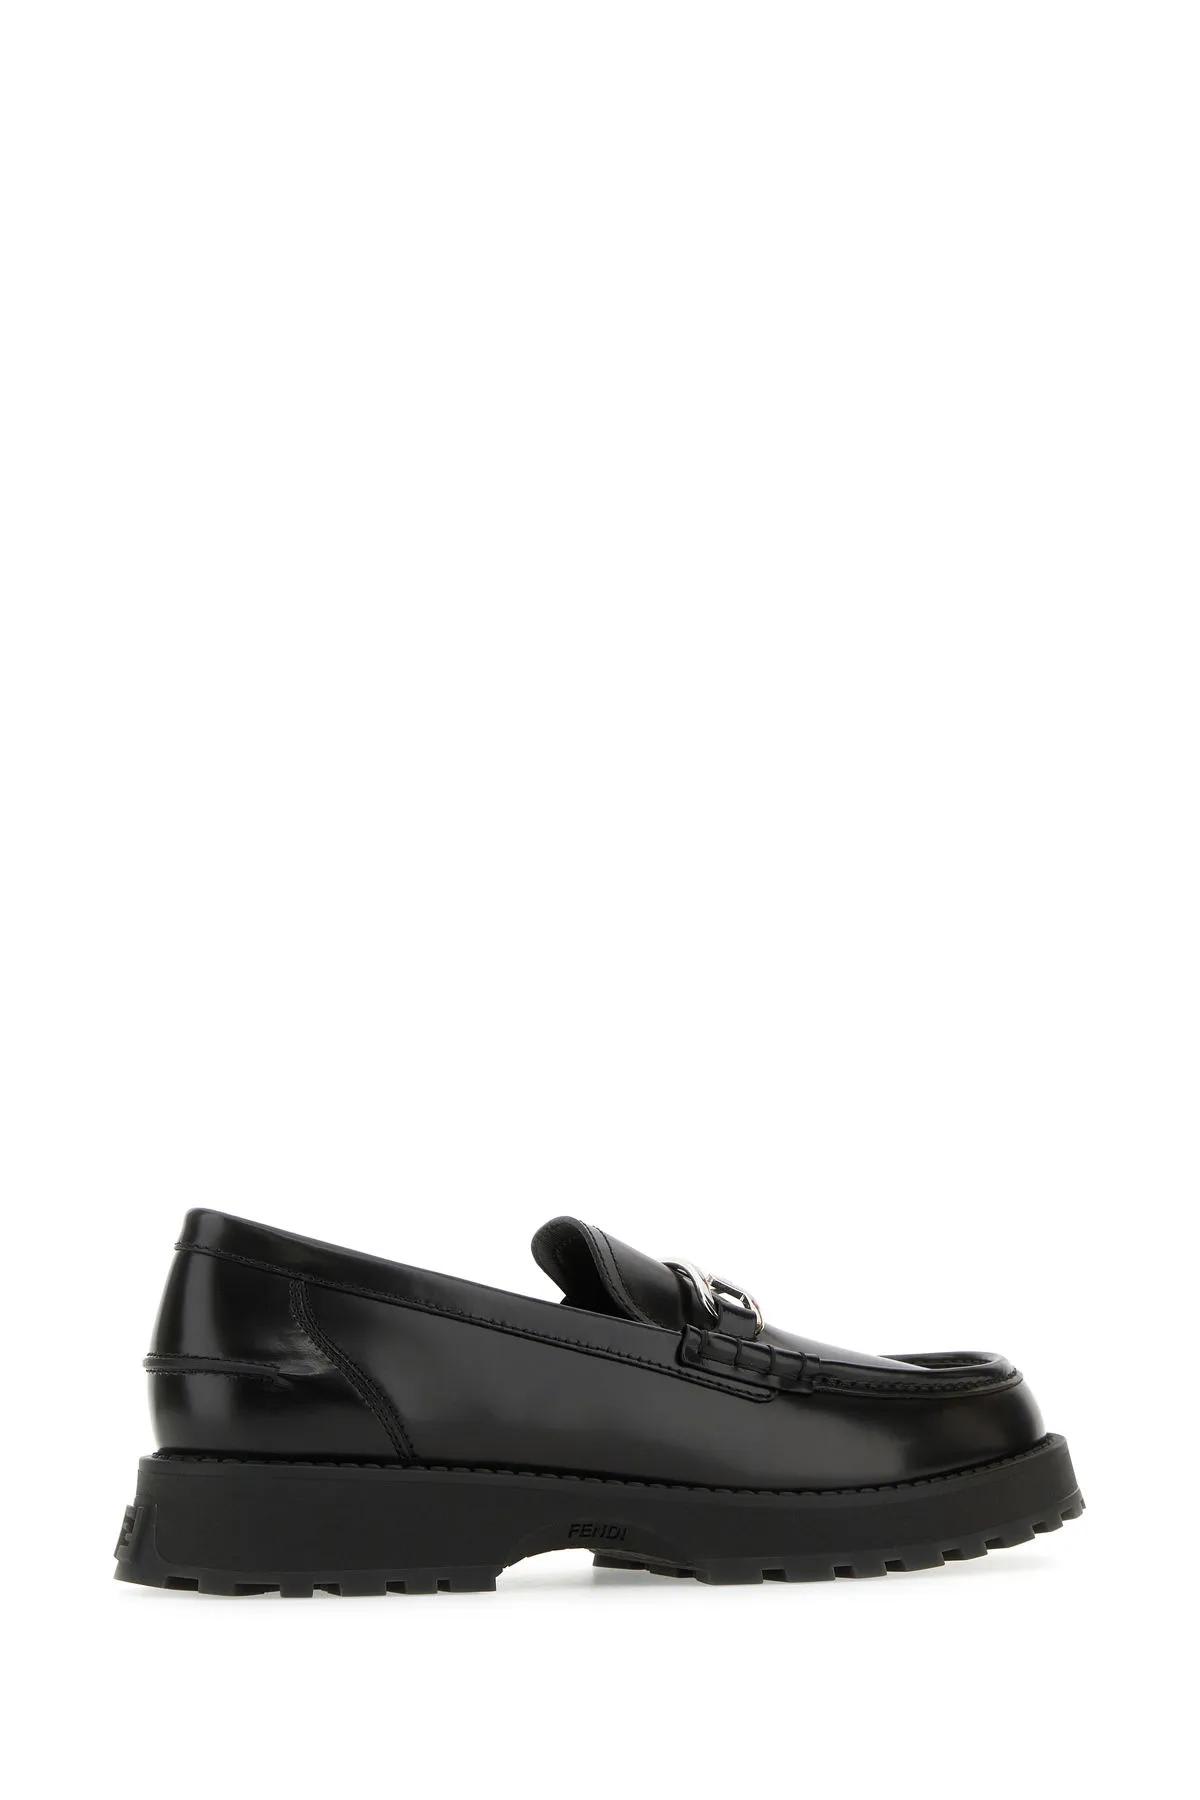 Shop Fendi Black Leather Oclock Loafers